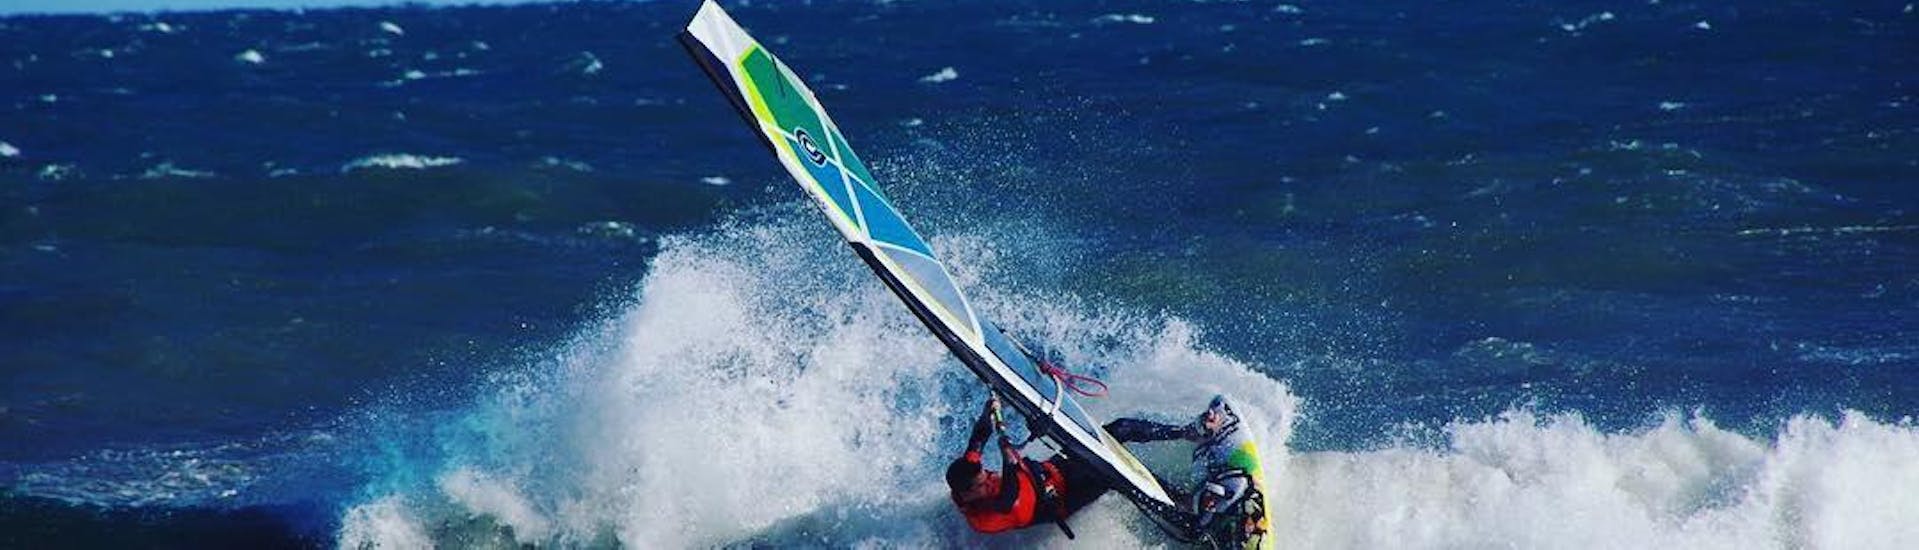 windsurfing-lessons-in-valencia---beginner-hero-1